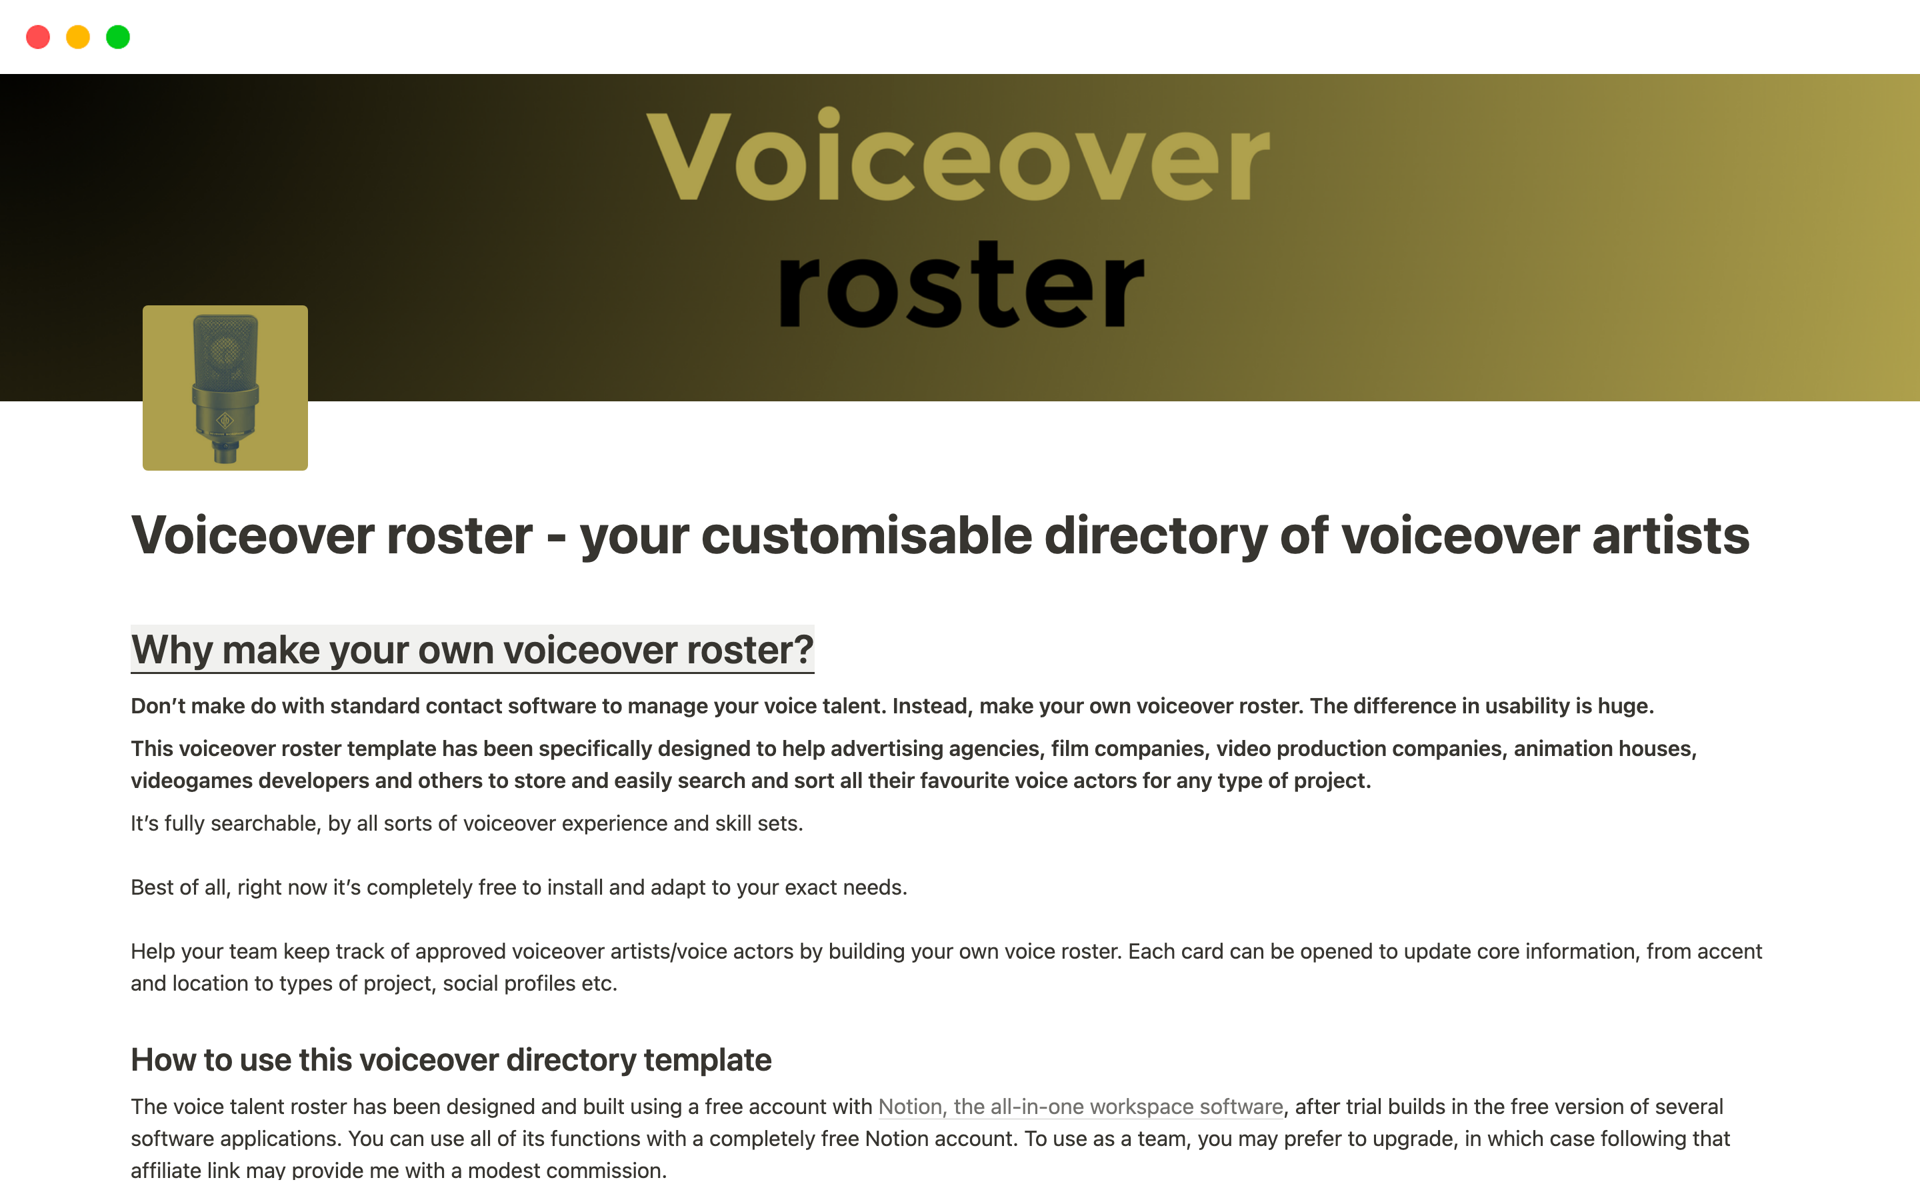 Vista previa de una plantilla para Voiceover roster - a voice artist directory